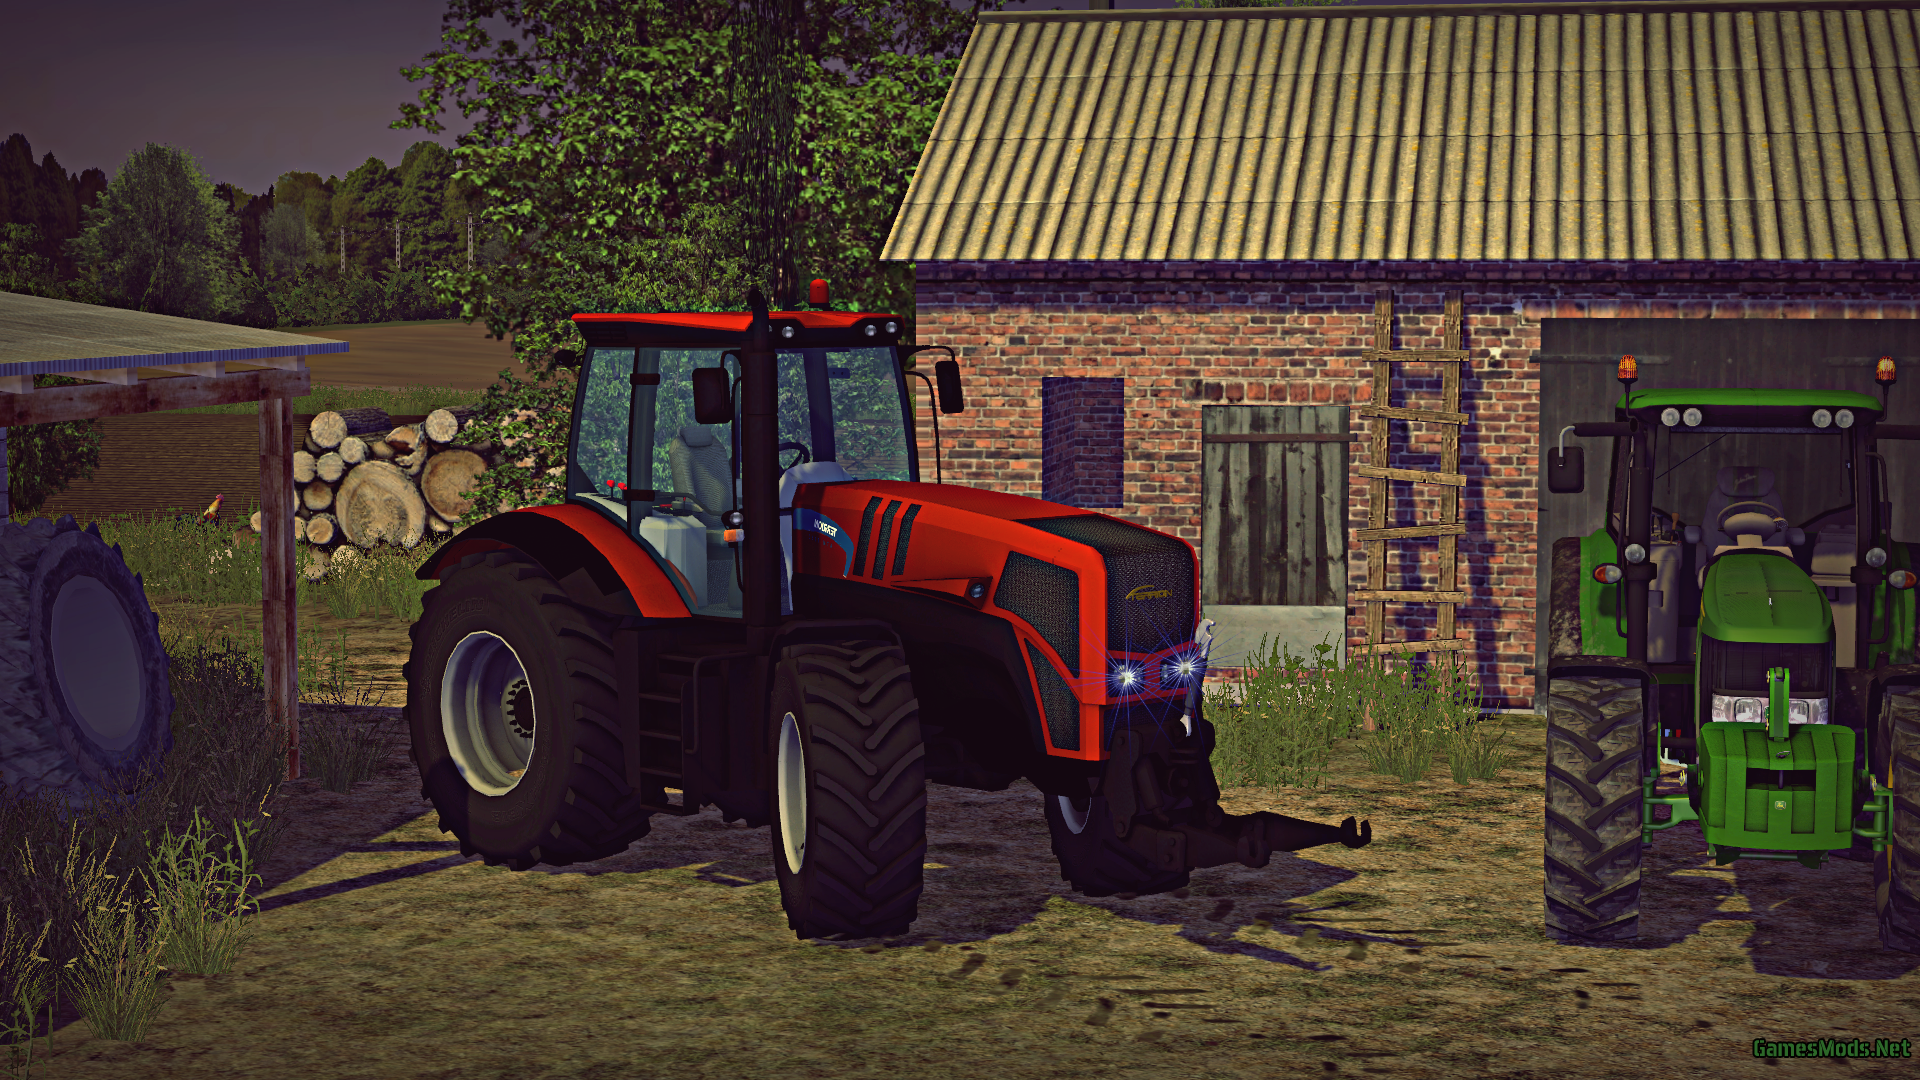 Плау модс. Трактор Террион 3180. Террион атм-7360 Farming Simulator 17. ATM 7360. Мод в ФС 17 на Терион трактор 5280.